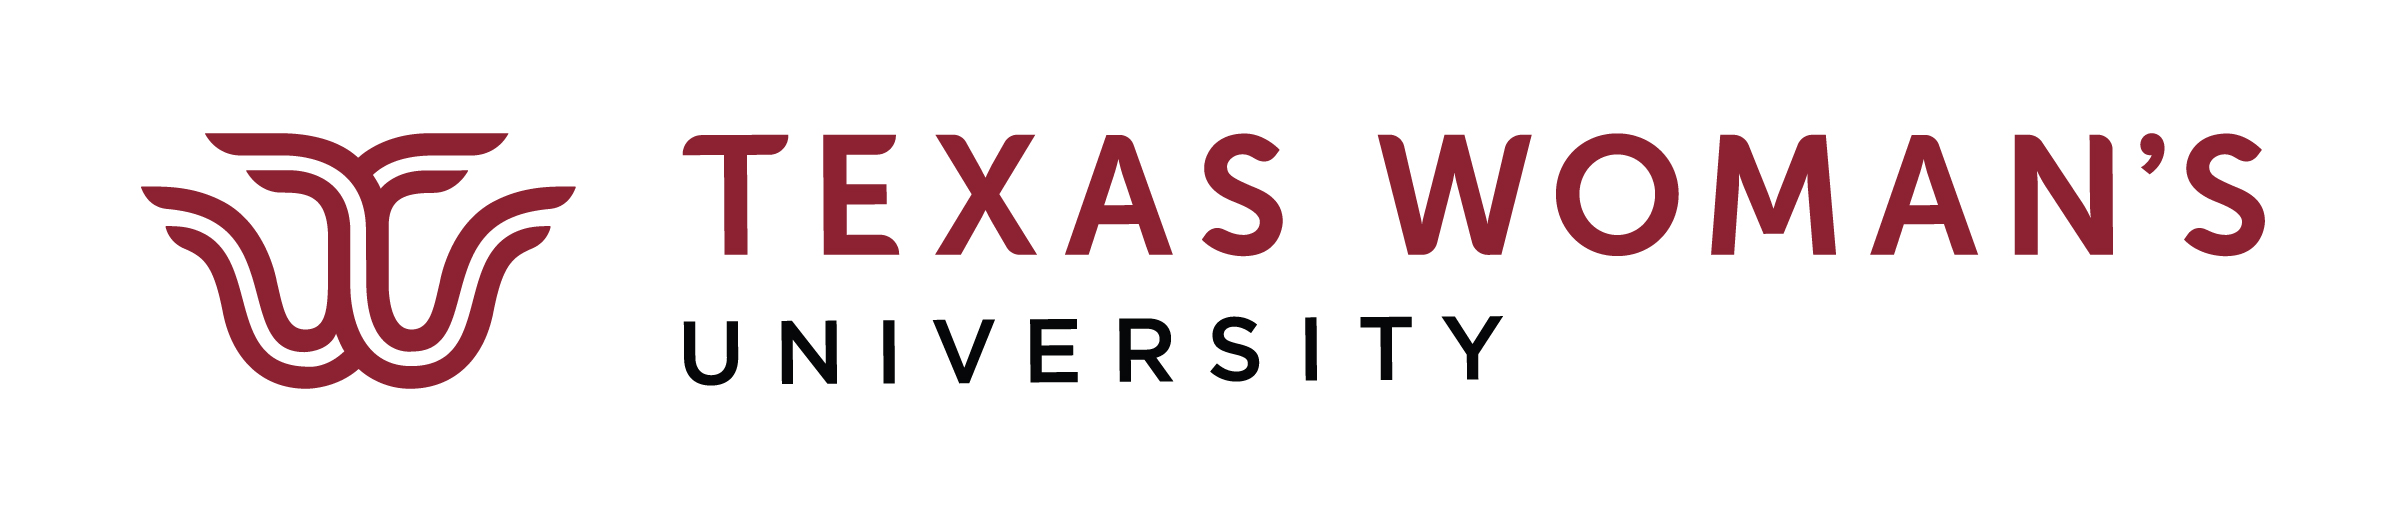 Texas Woman's University - Dallas